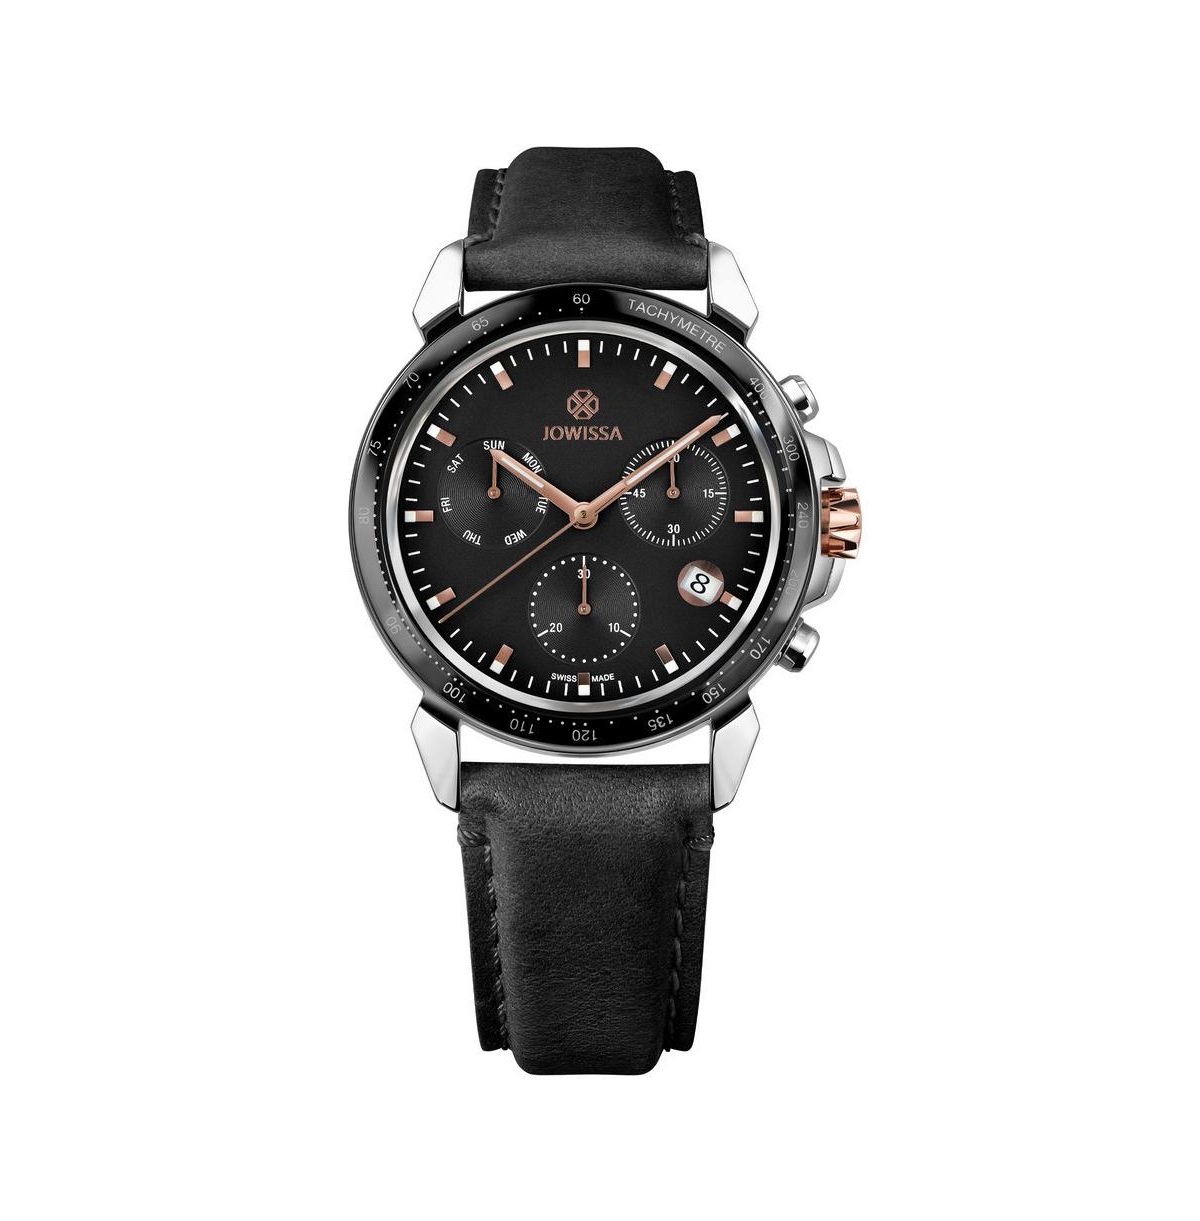 LeWy 9 Swiss Men's 42mm Watch - Black & Rose Gold Dial - Black